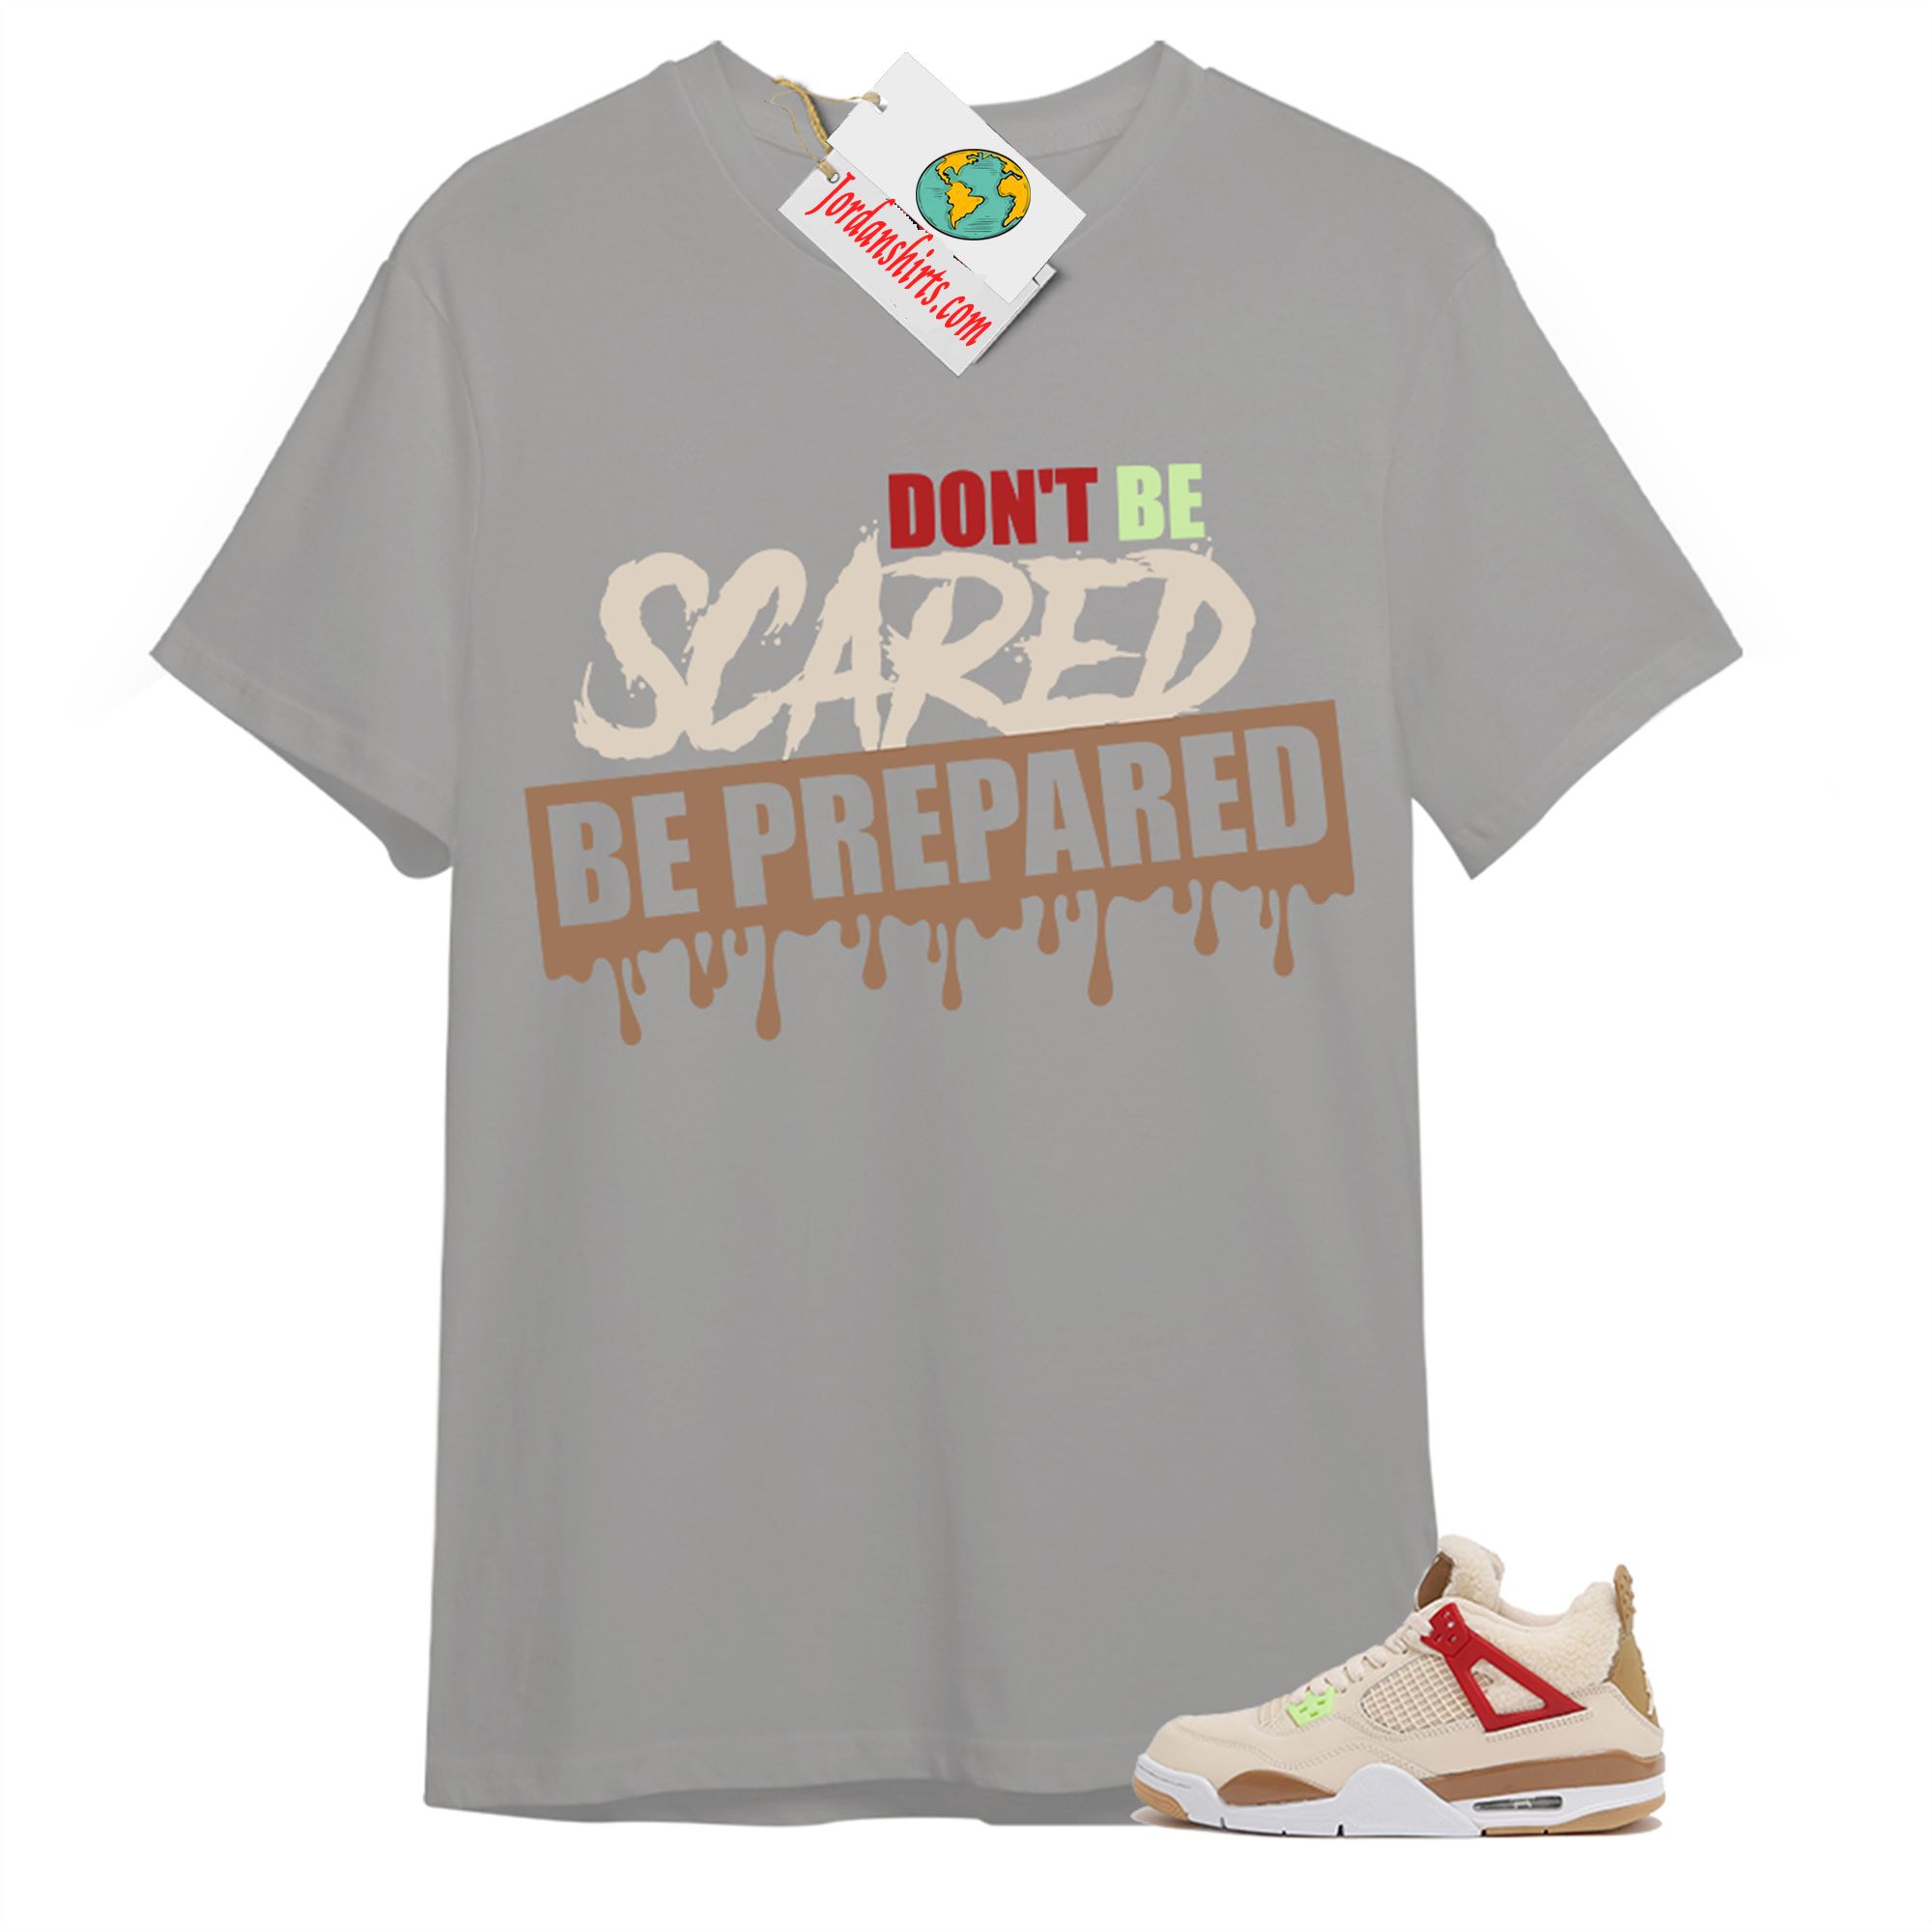 Jordan 4 Shirt, Dont Be Scared Be Prepared Grey T-shirt Air Jordan 4 Wild Things 4s Size Up To 5xl